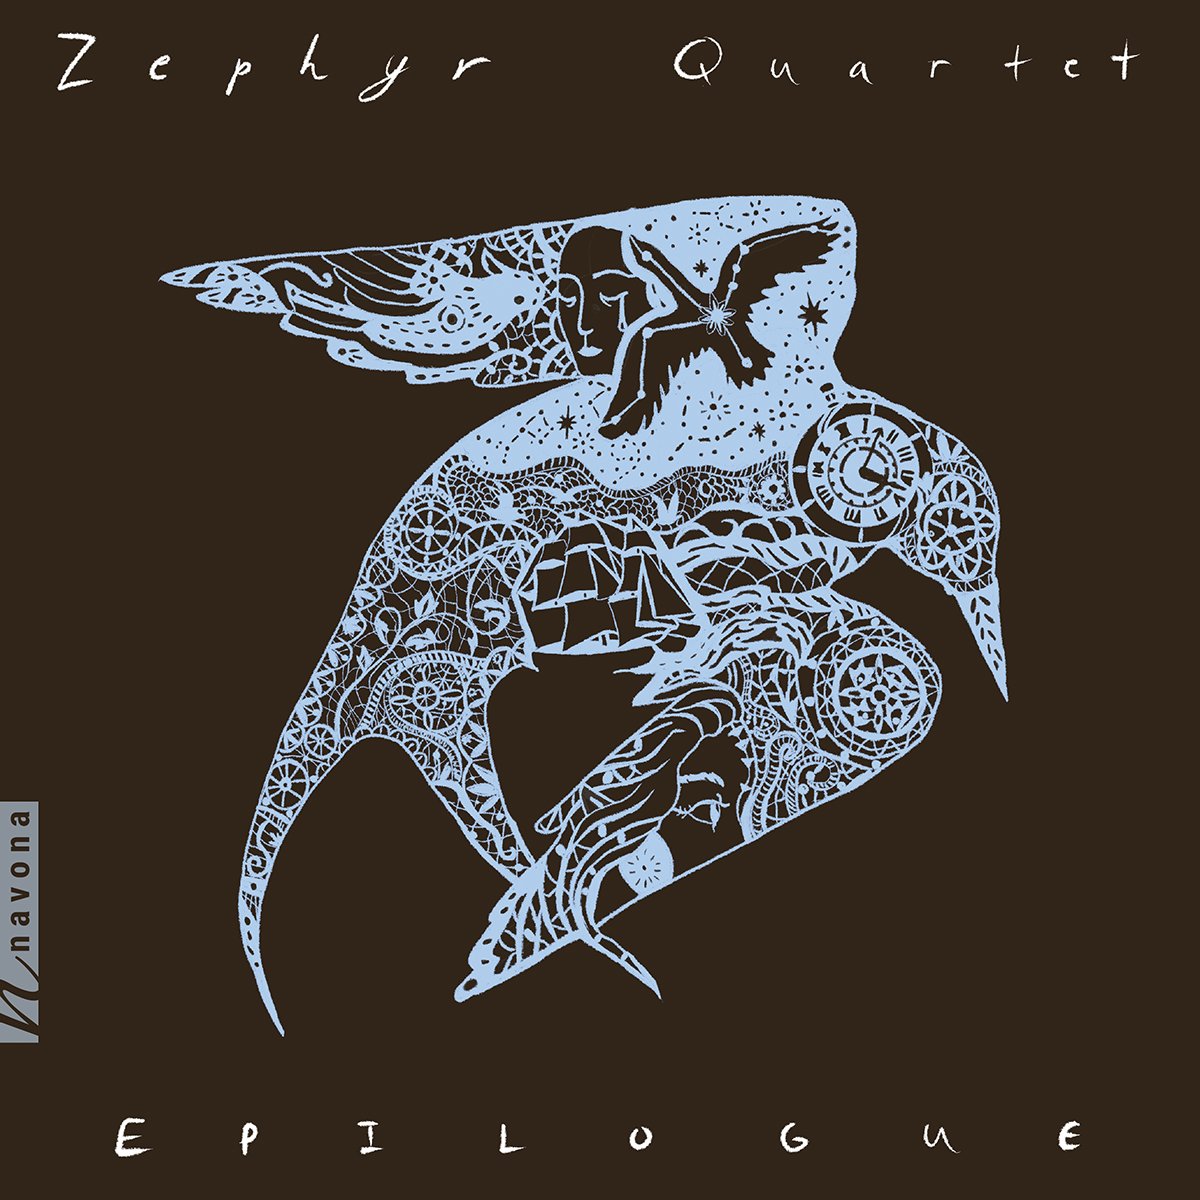 Zephyr Quartet - "Epilogue" [Recorded (JB & JP)]